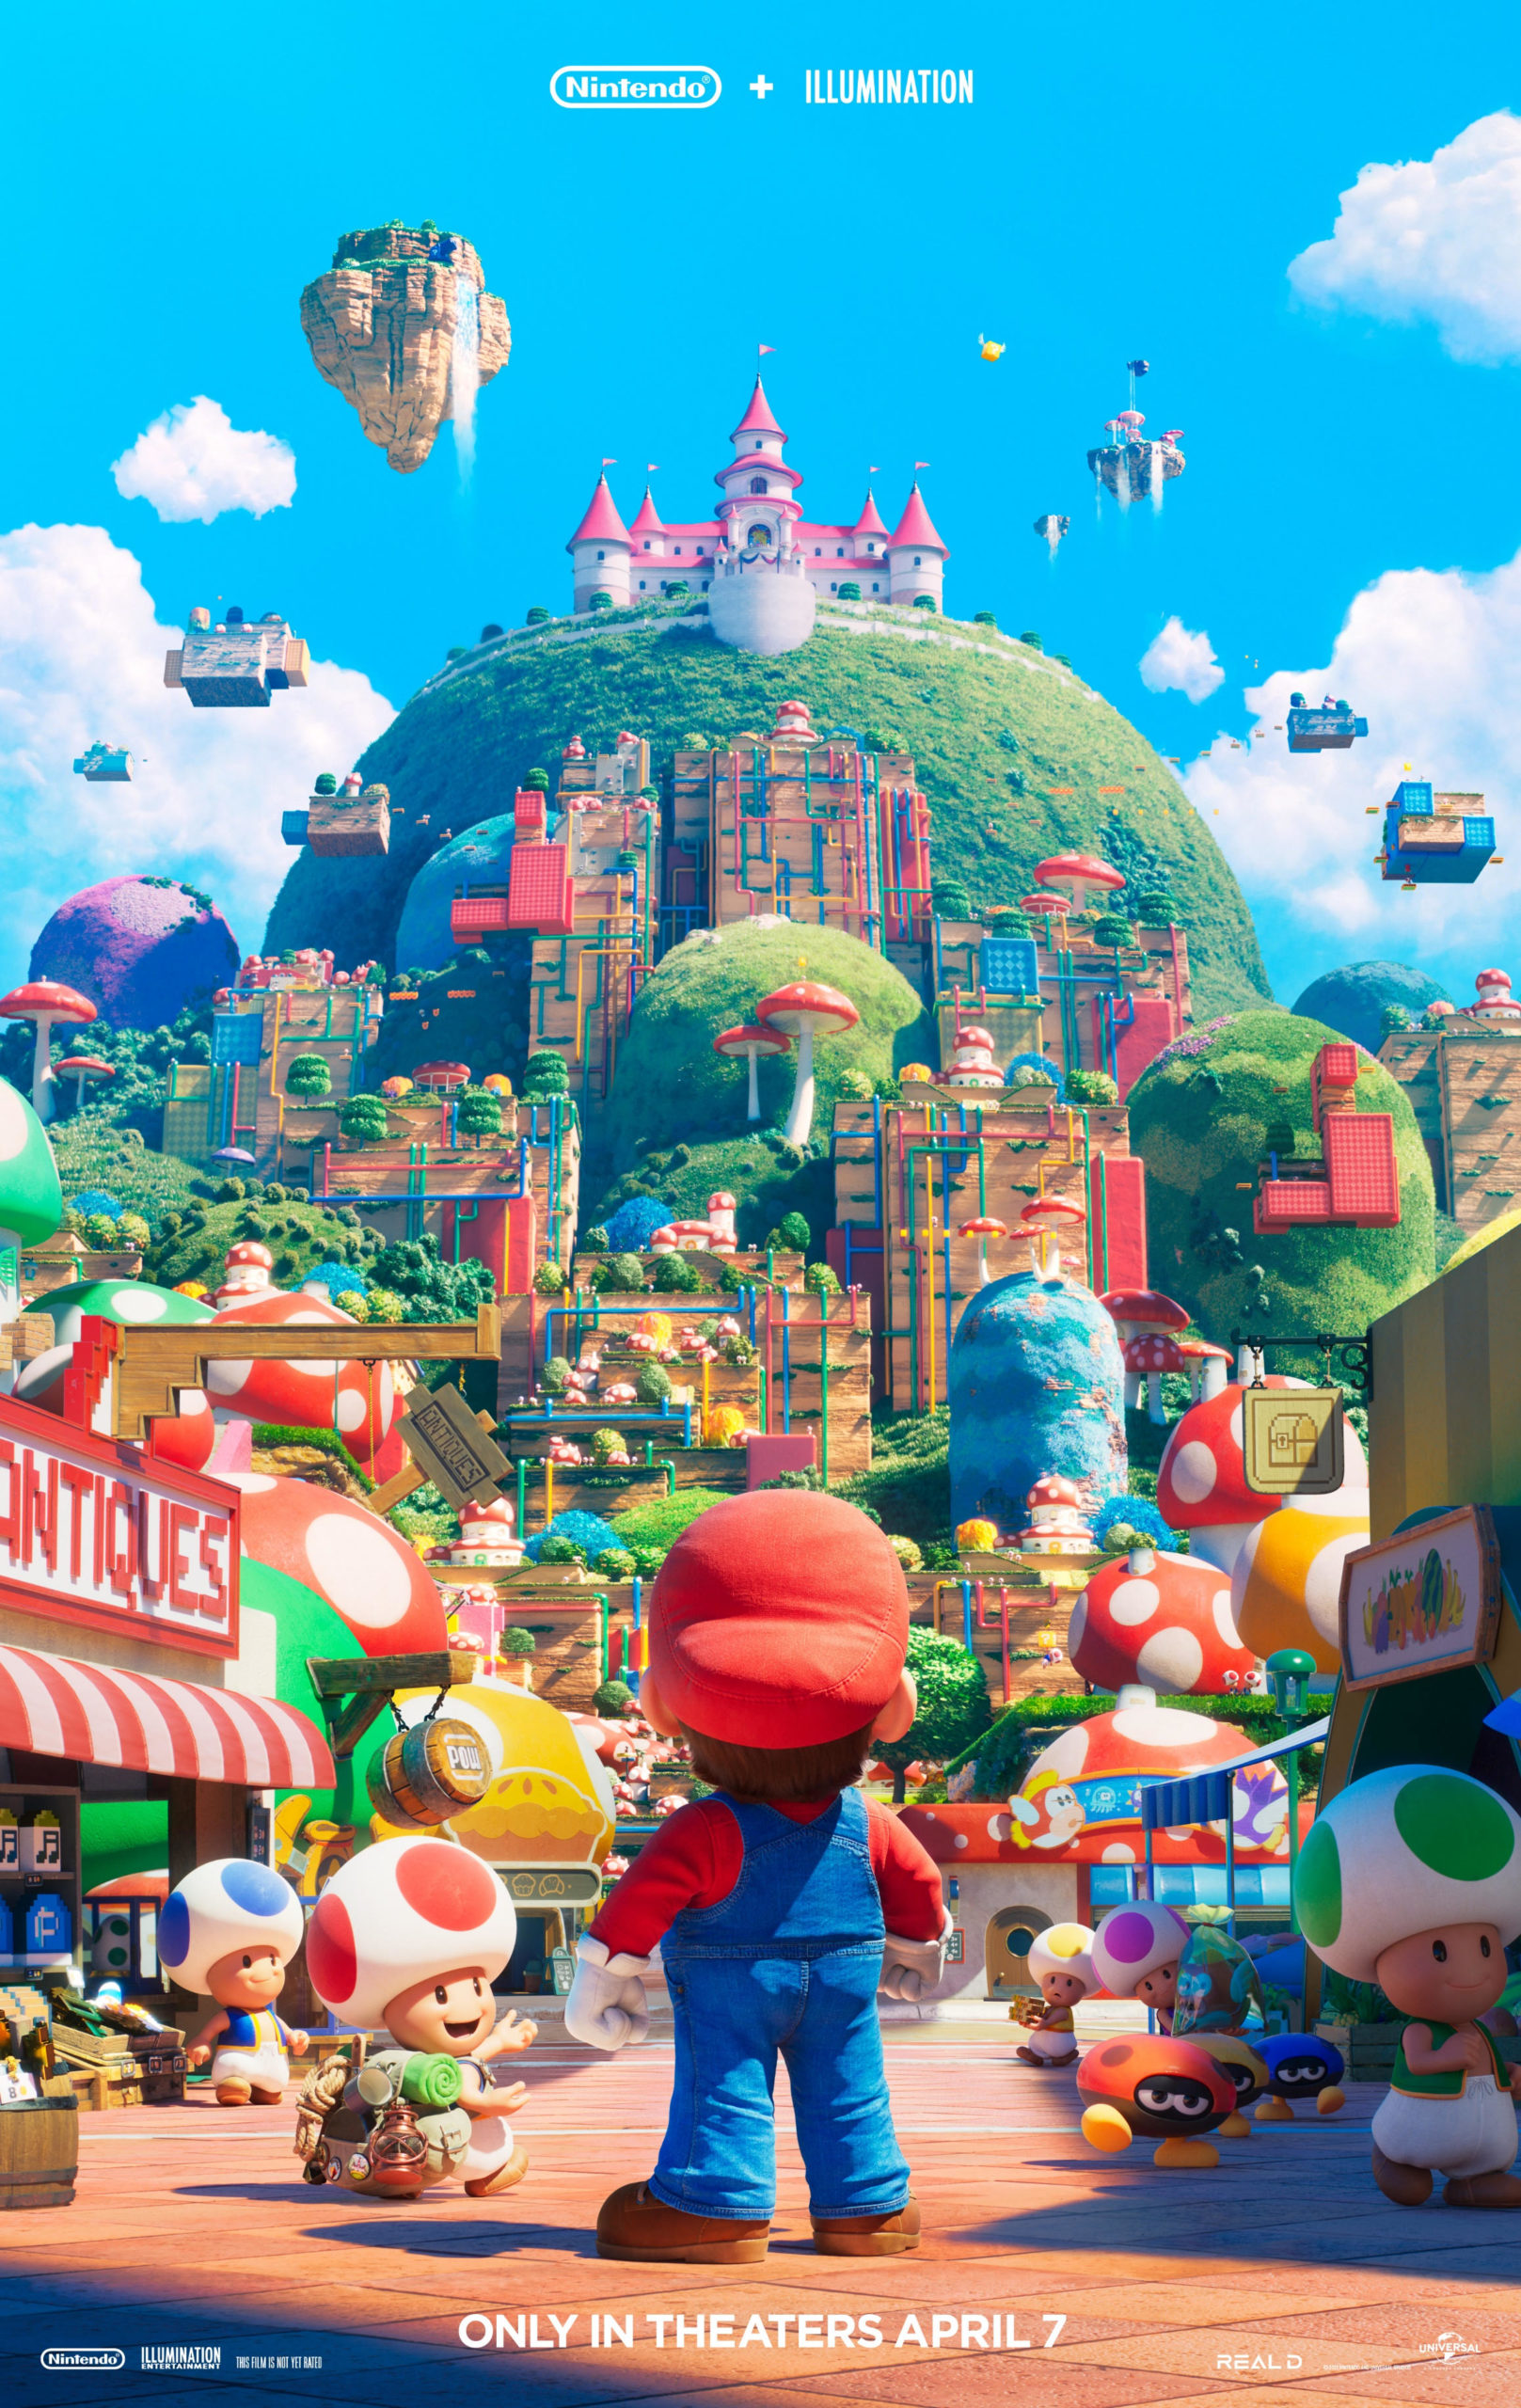 The Super Mario Bros. poster